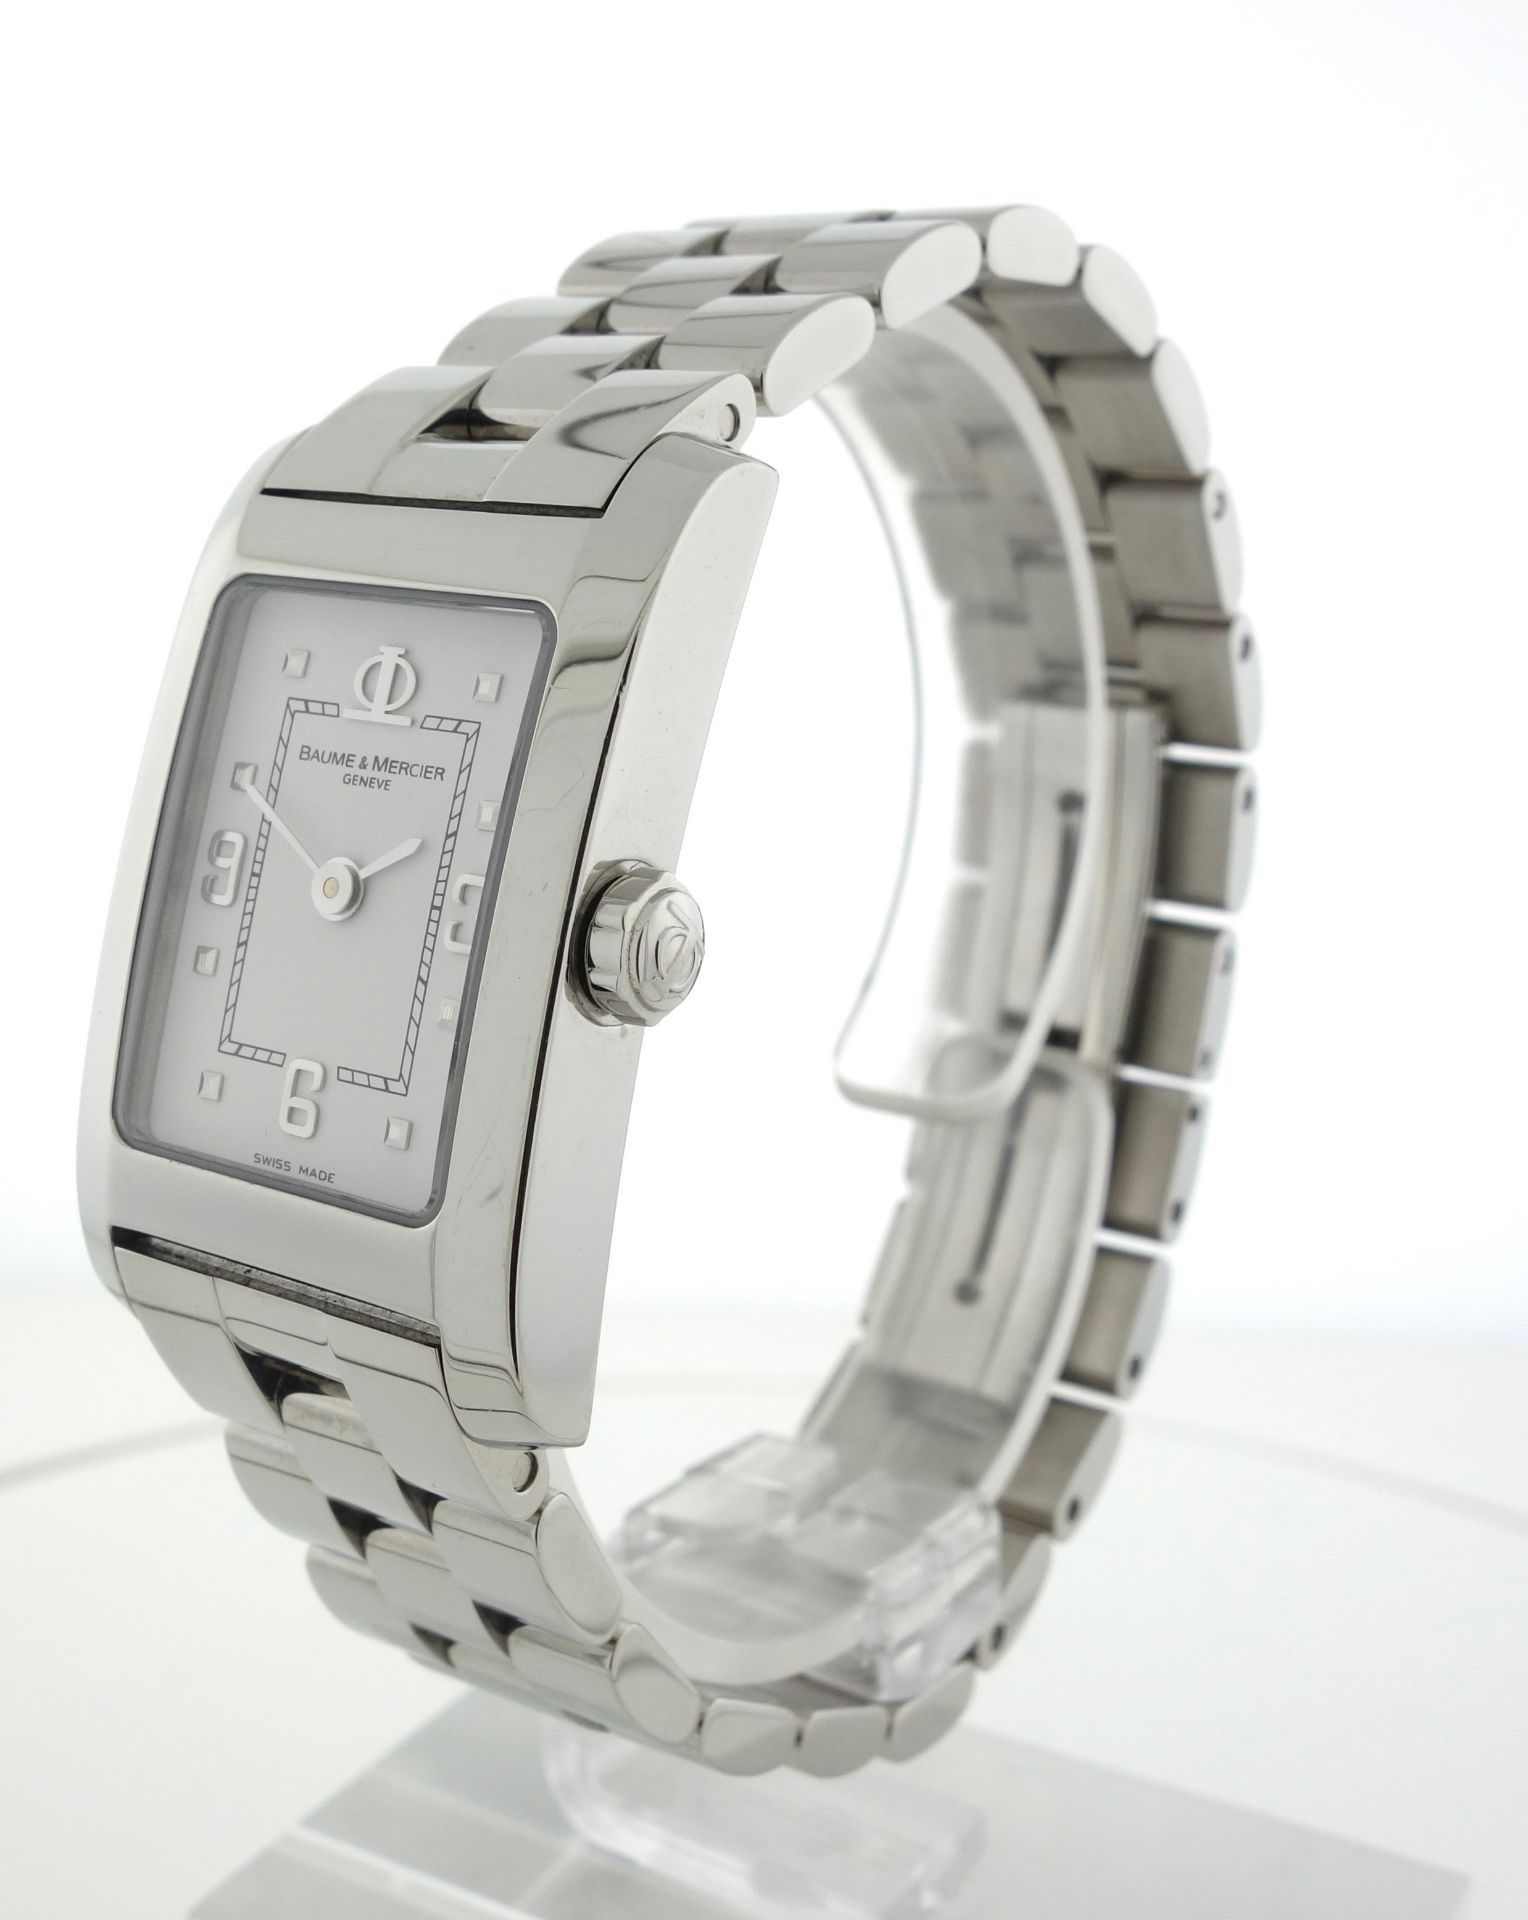 2010 Baume & Mercier Lady Hampton Bracelet Watch - 65433 - Image 2 of 5